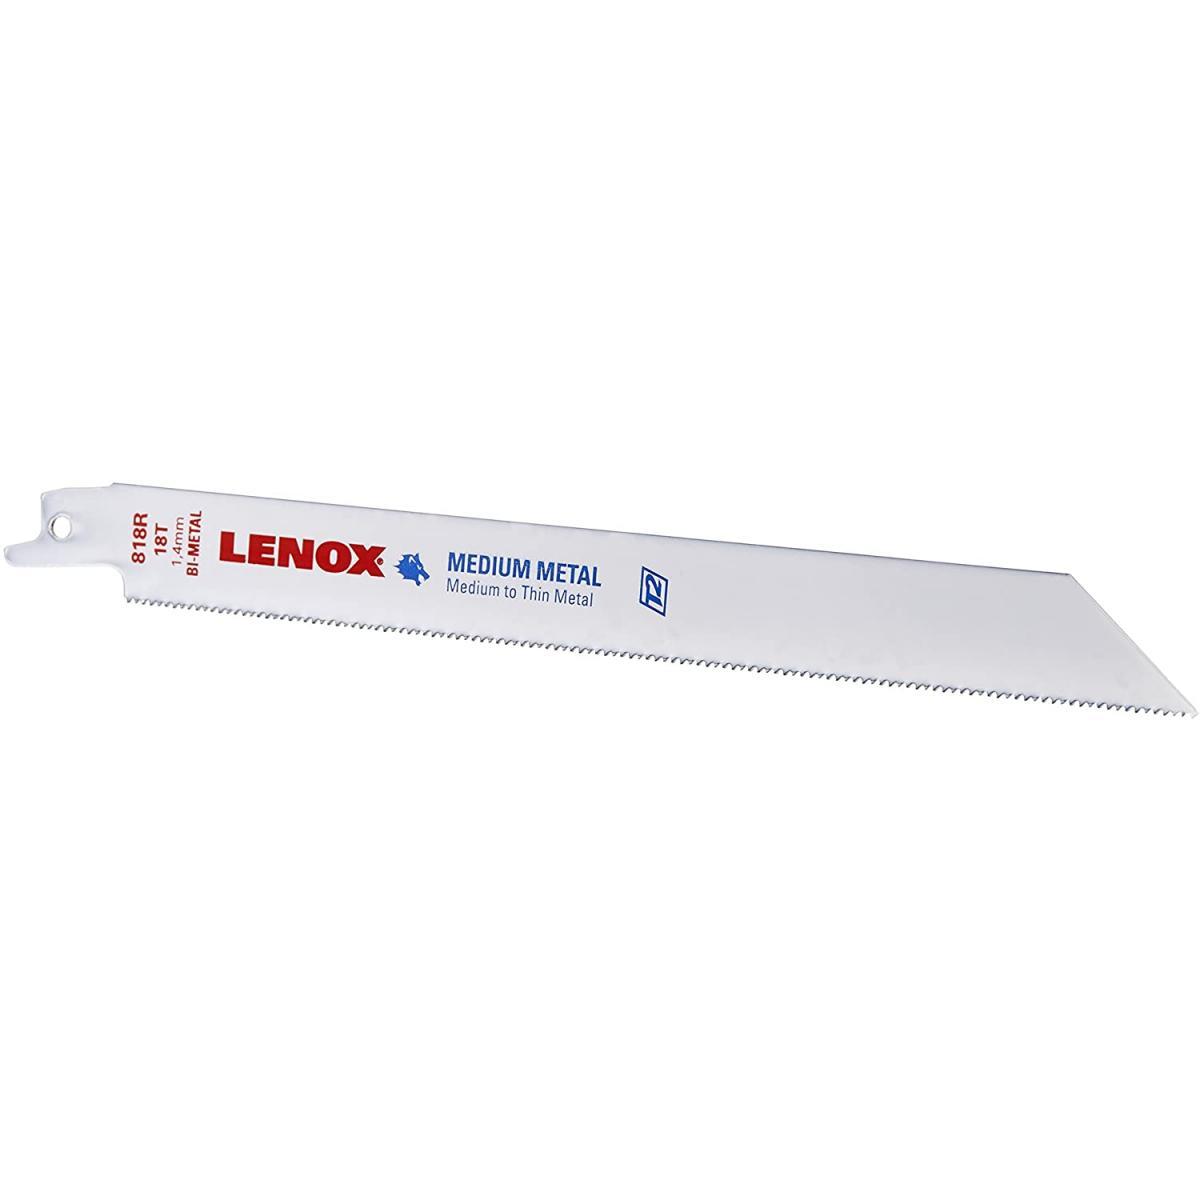 LENOX バイメタル セーバーソーブレード B818R 200mm18山 25枚入り 20487B818R レノックス 替え刃 替刃